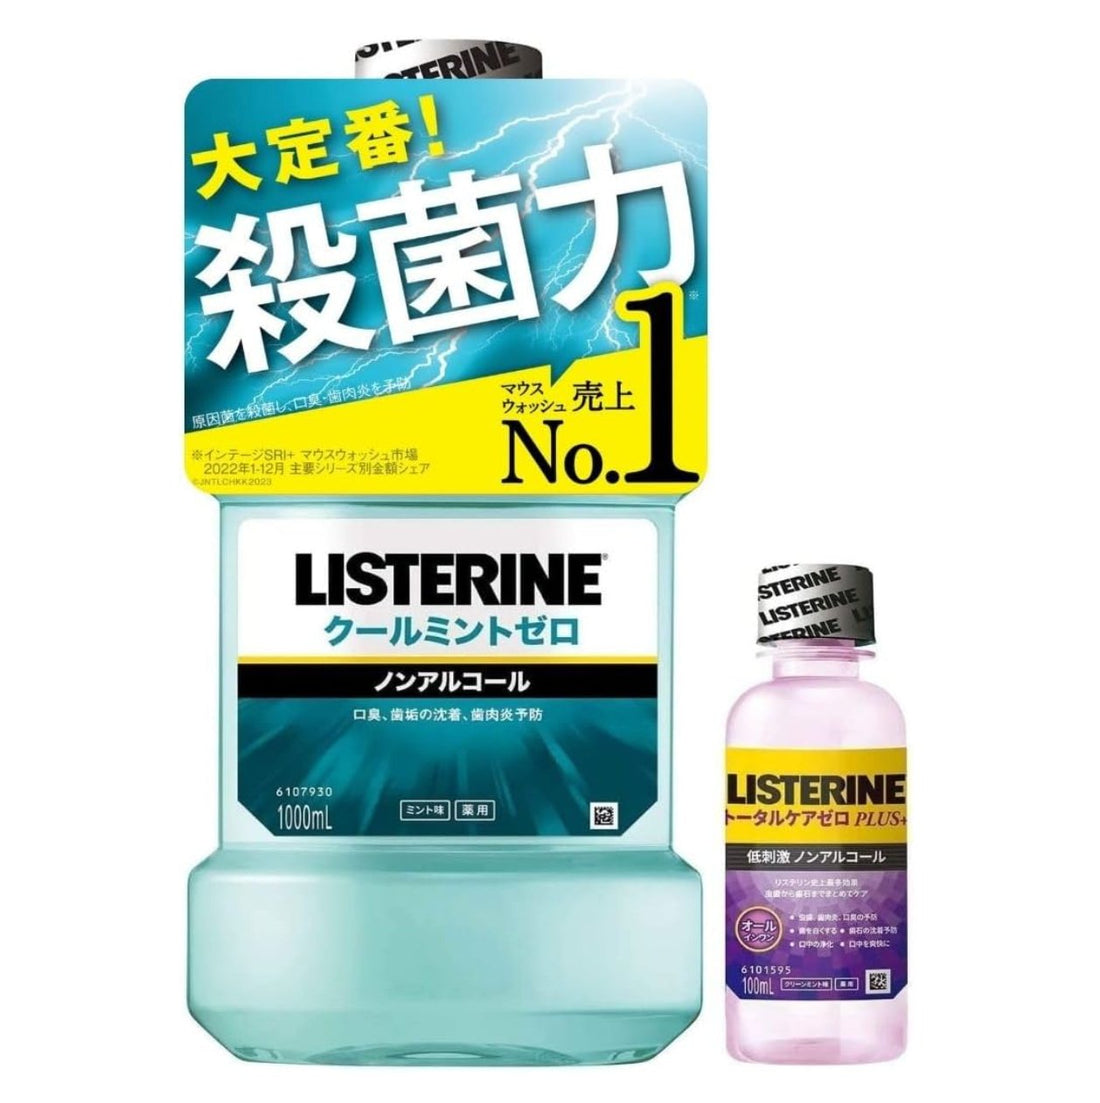 LISTERINE Listerine Cool Mint Zero 1000ml + 100ml with bonus mouthwash, hypoallergenic, sterilizing, bad breath, gingivitis prevention, quasi-drug, medicated, non-alcoholic, mint flavor - NihonMura